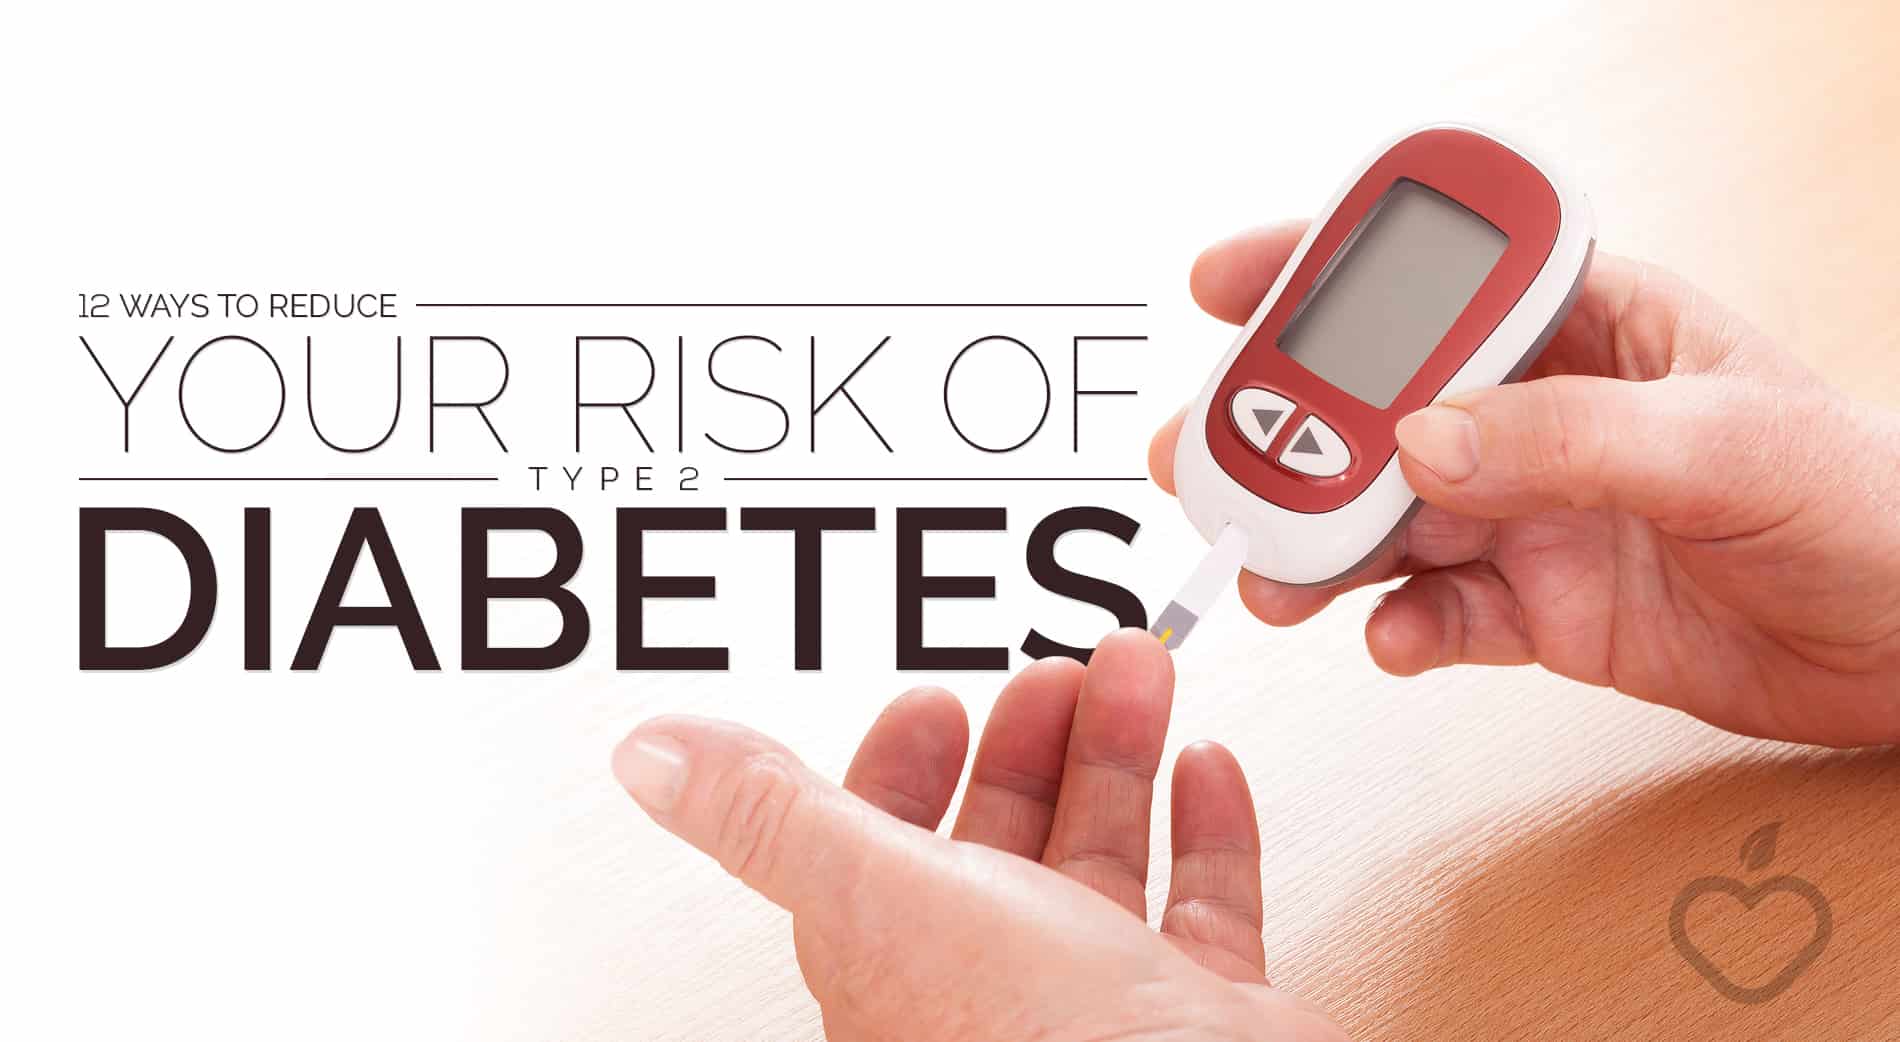 Risk of Diabetes